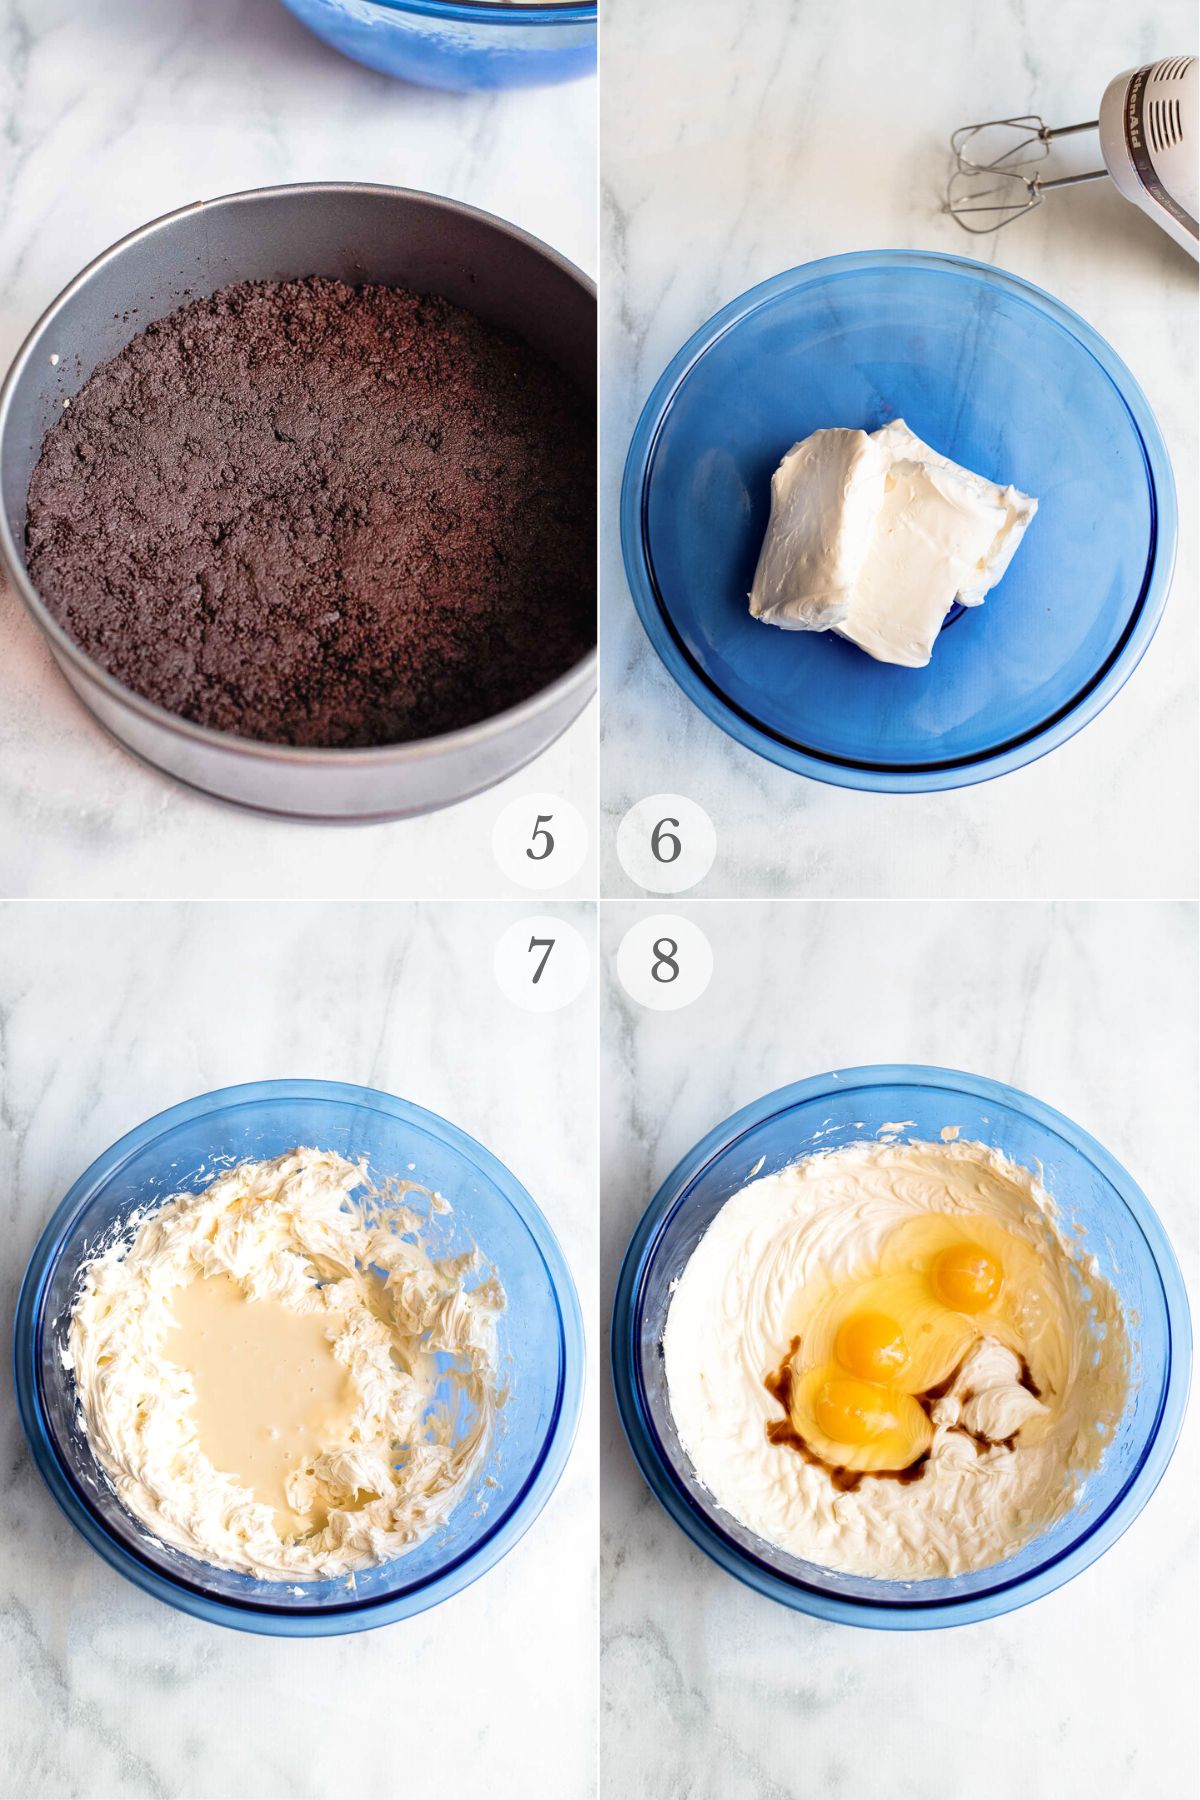 chocolate chip cheesecake recipe steps 5-8.